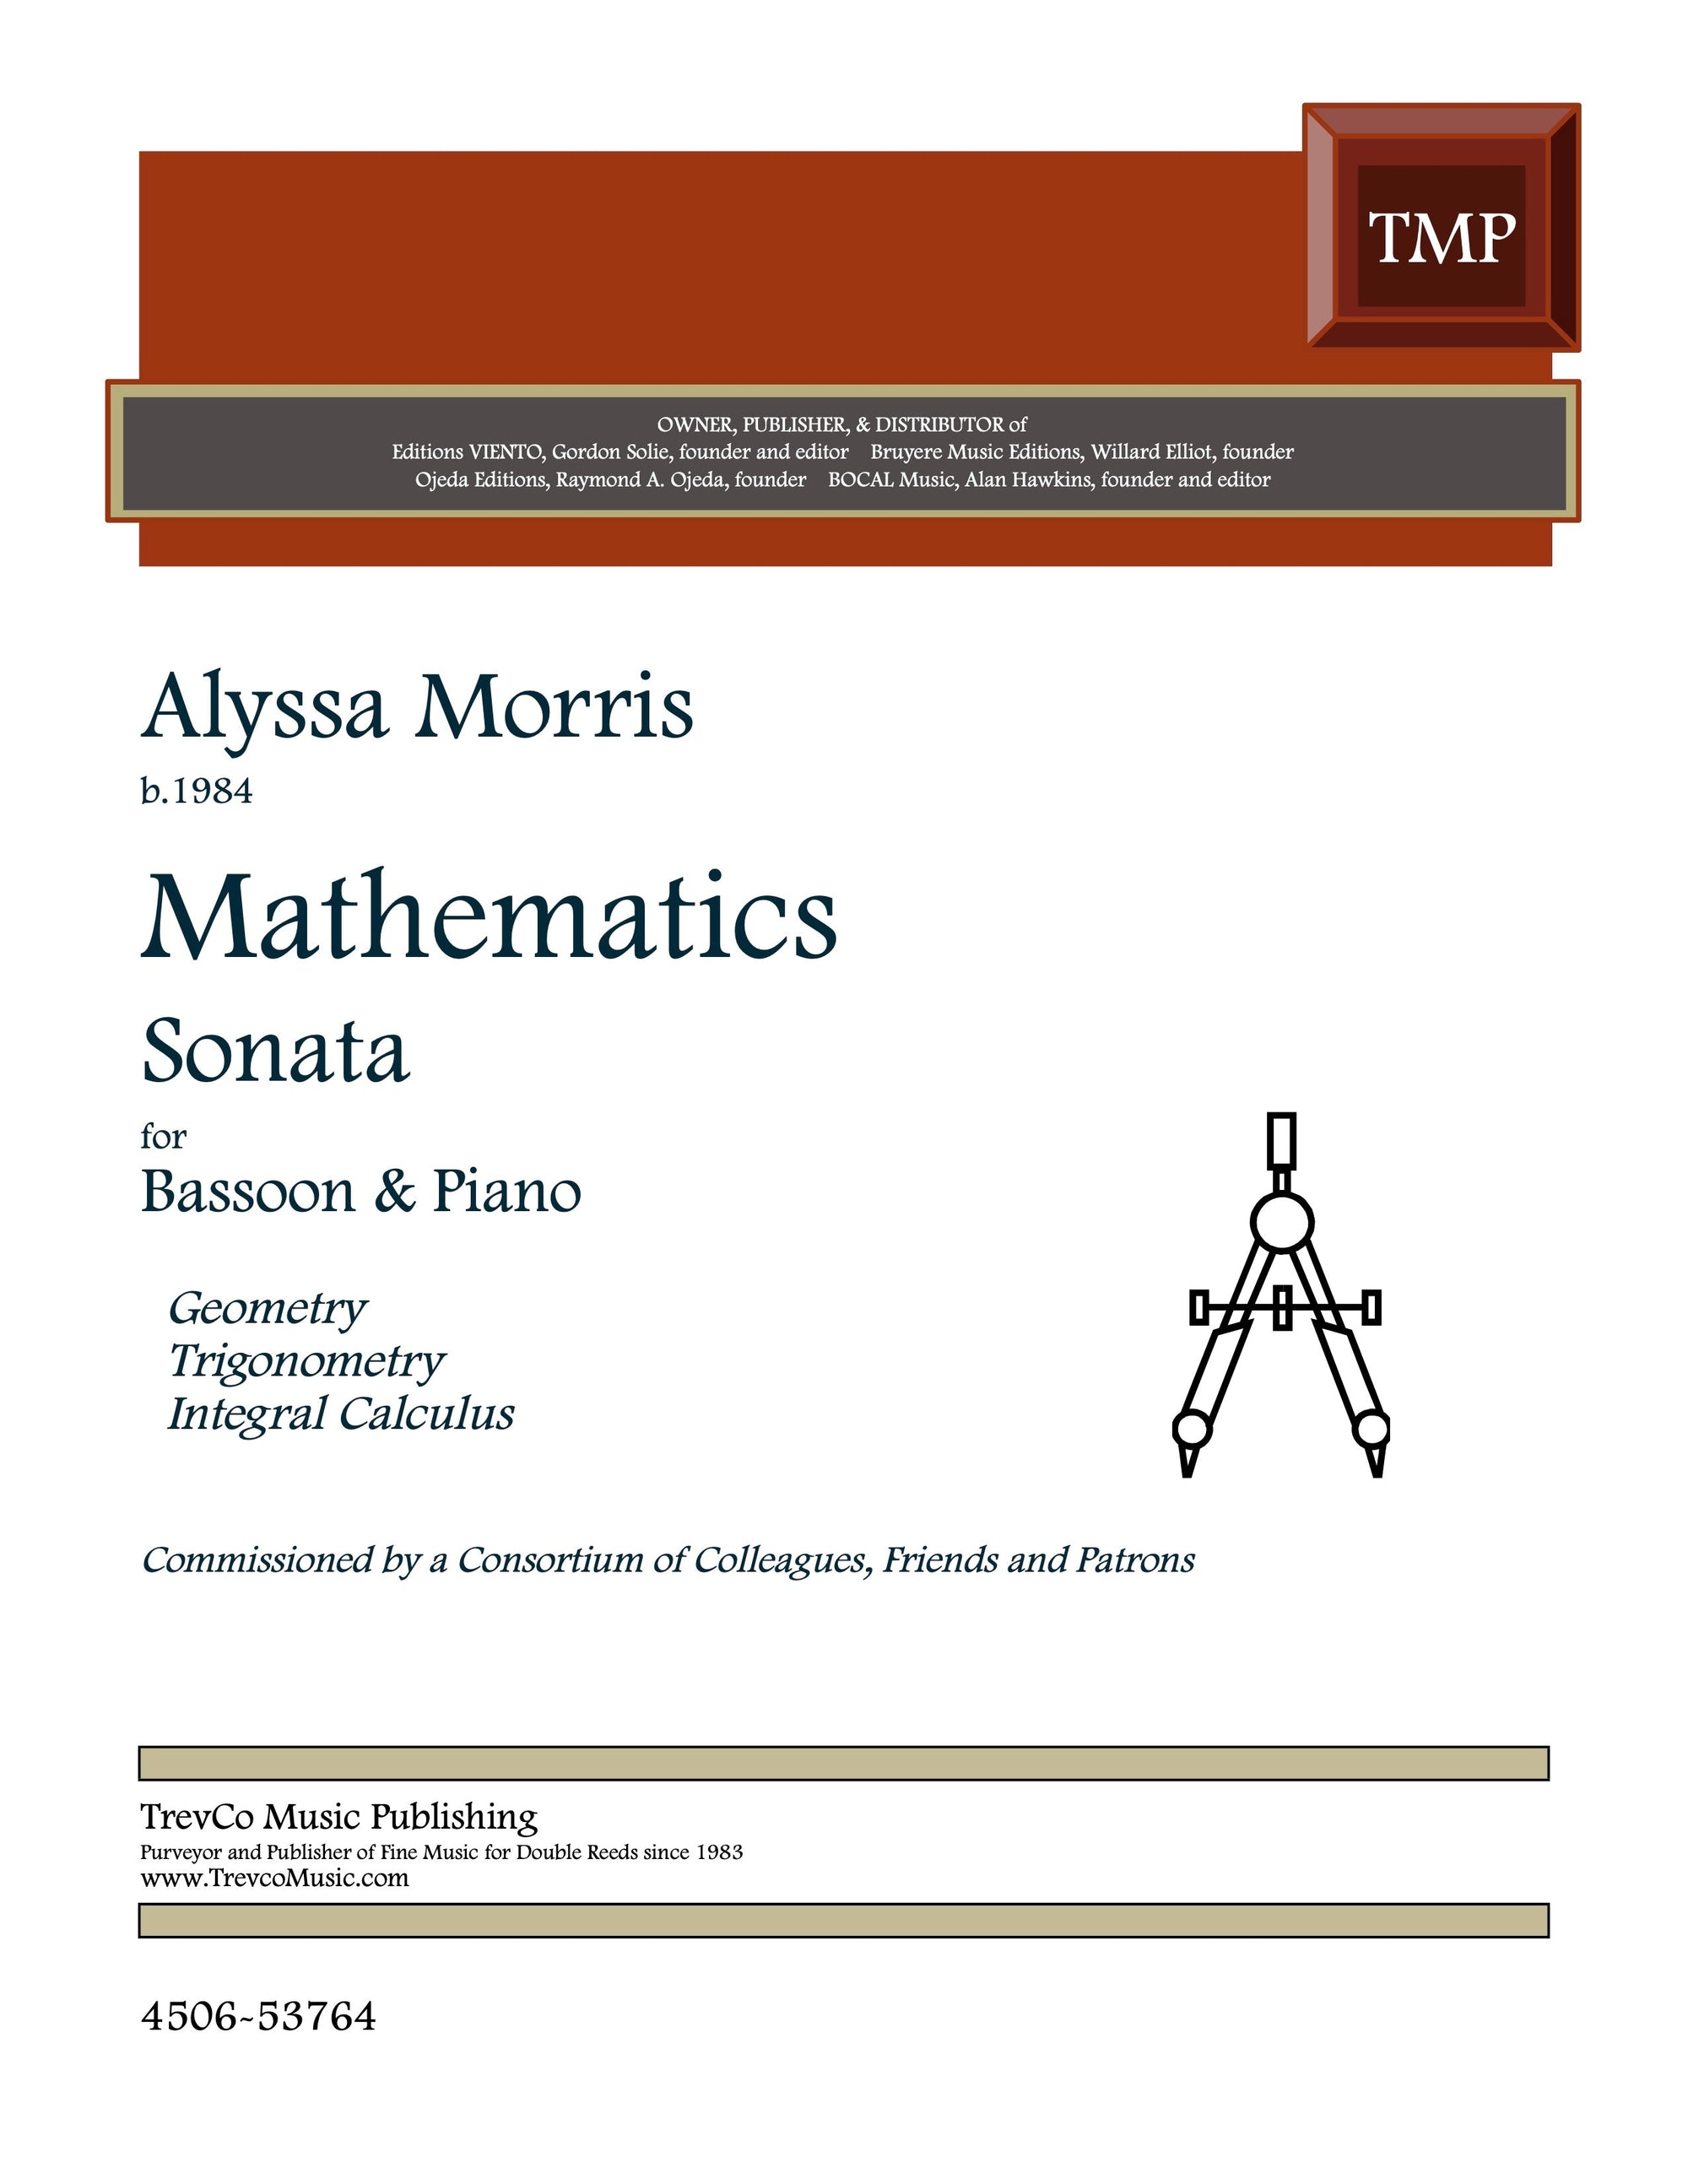 Morris: Mathematics